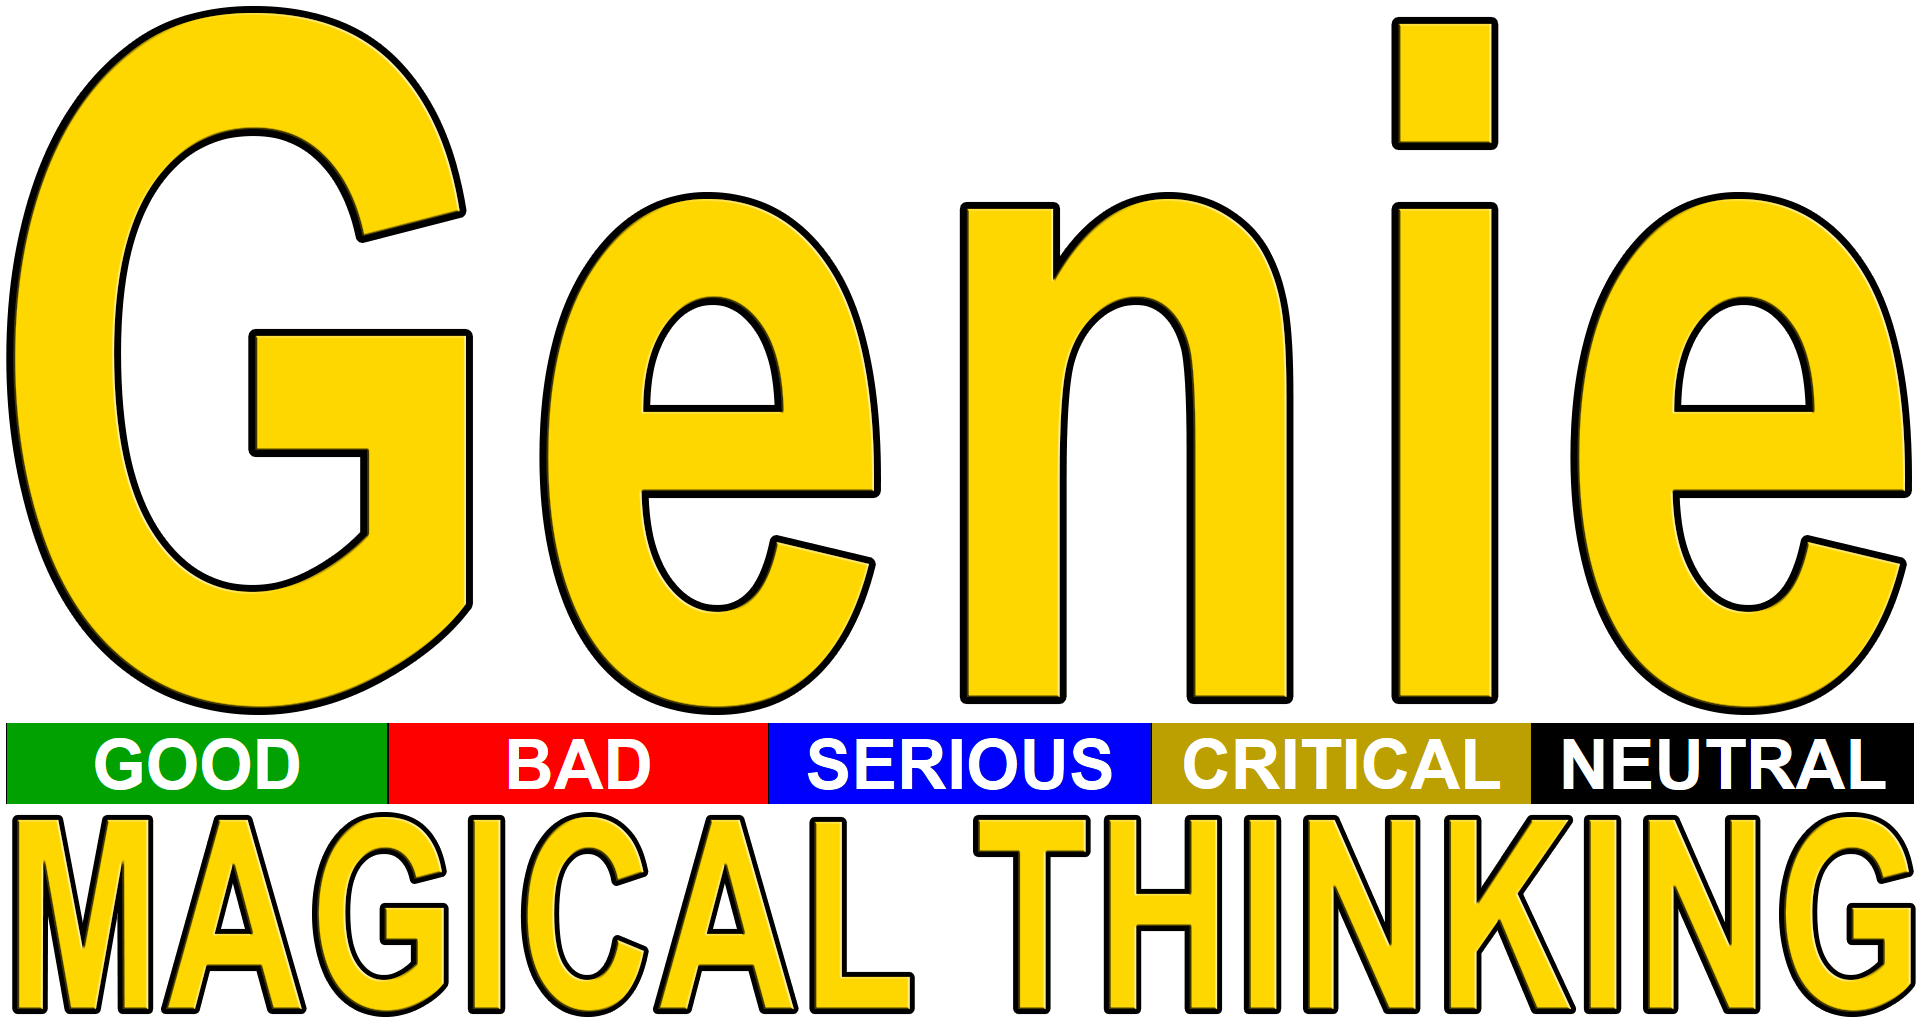 Genie - MAGICAL THINKING